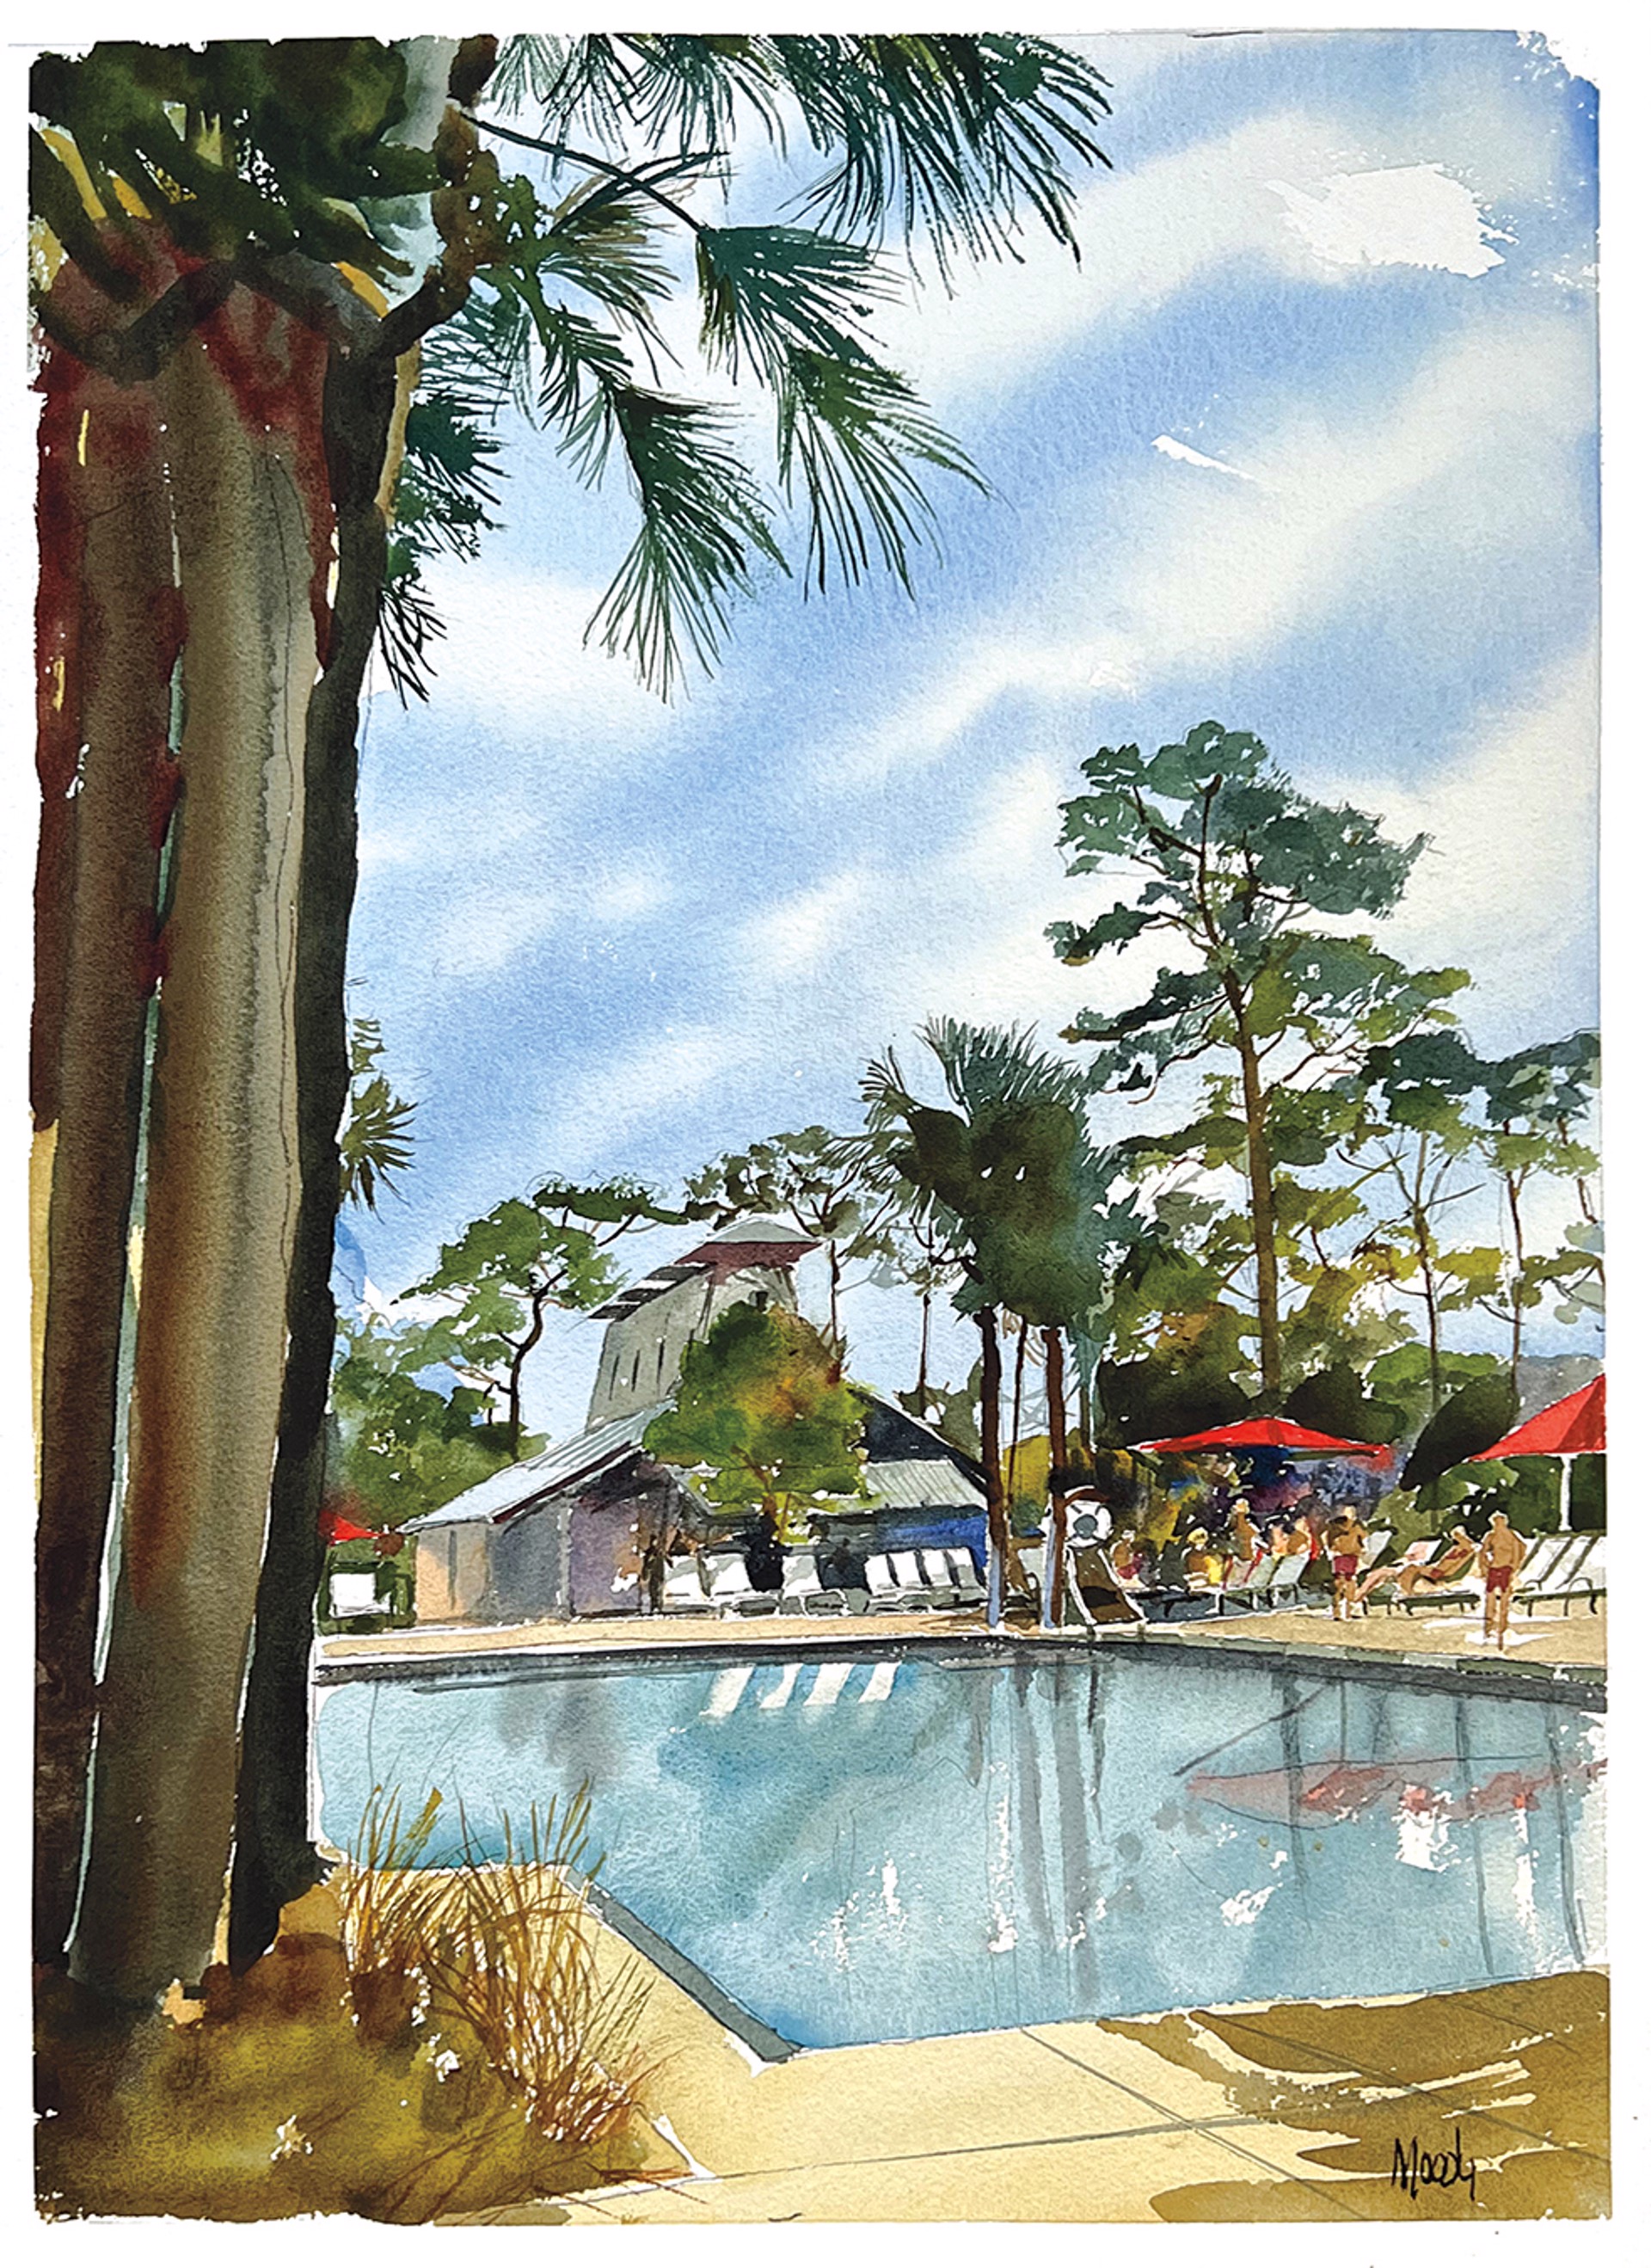 Pool and Boat House at Watercolor by Bob Moody